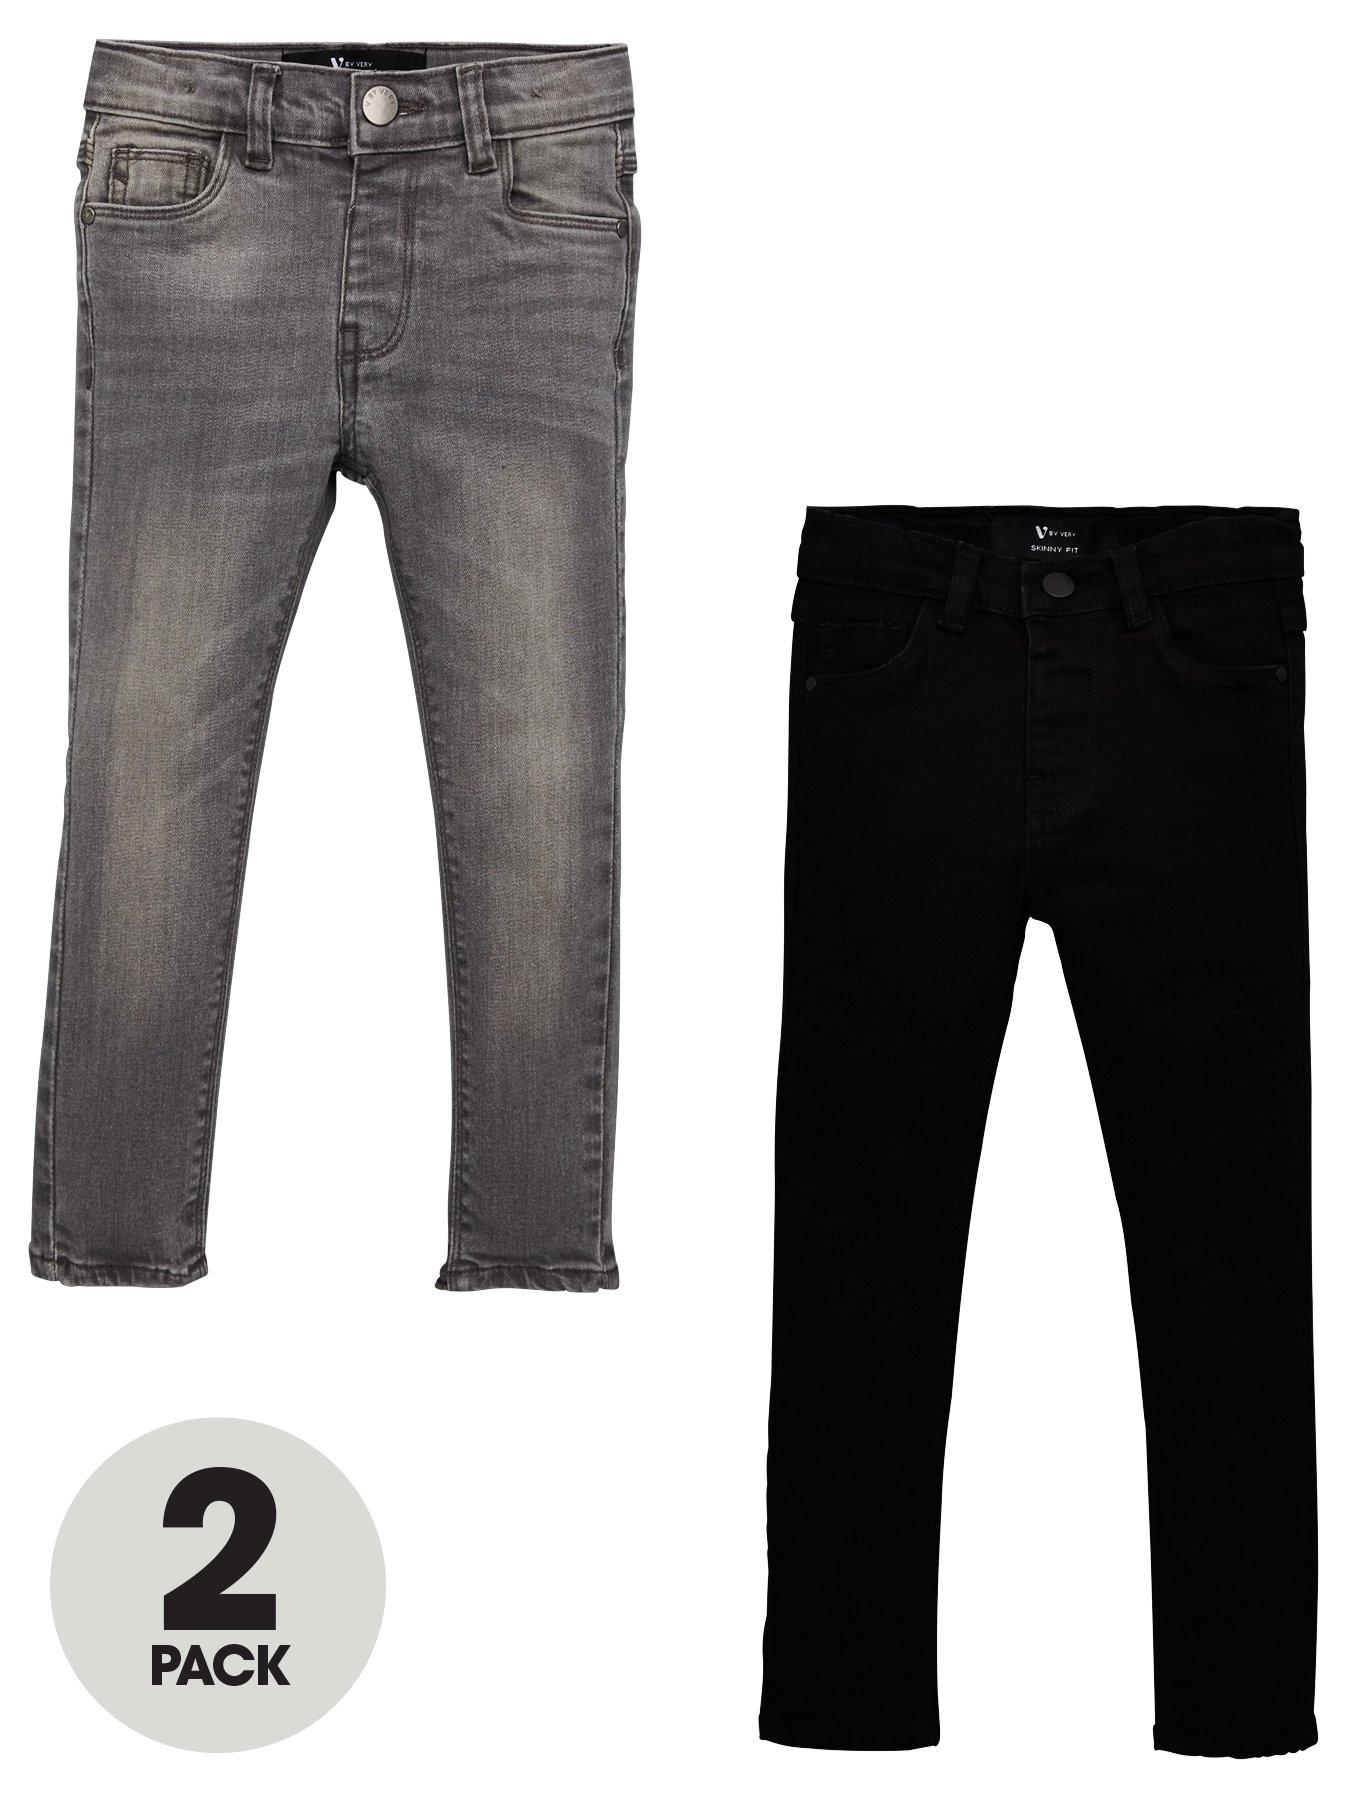 Pack Skinny Jeans - Black/Grey 